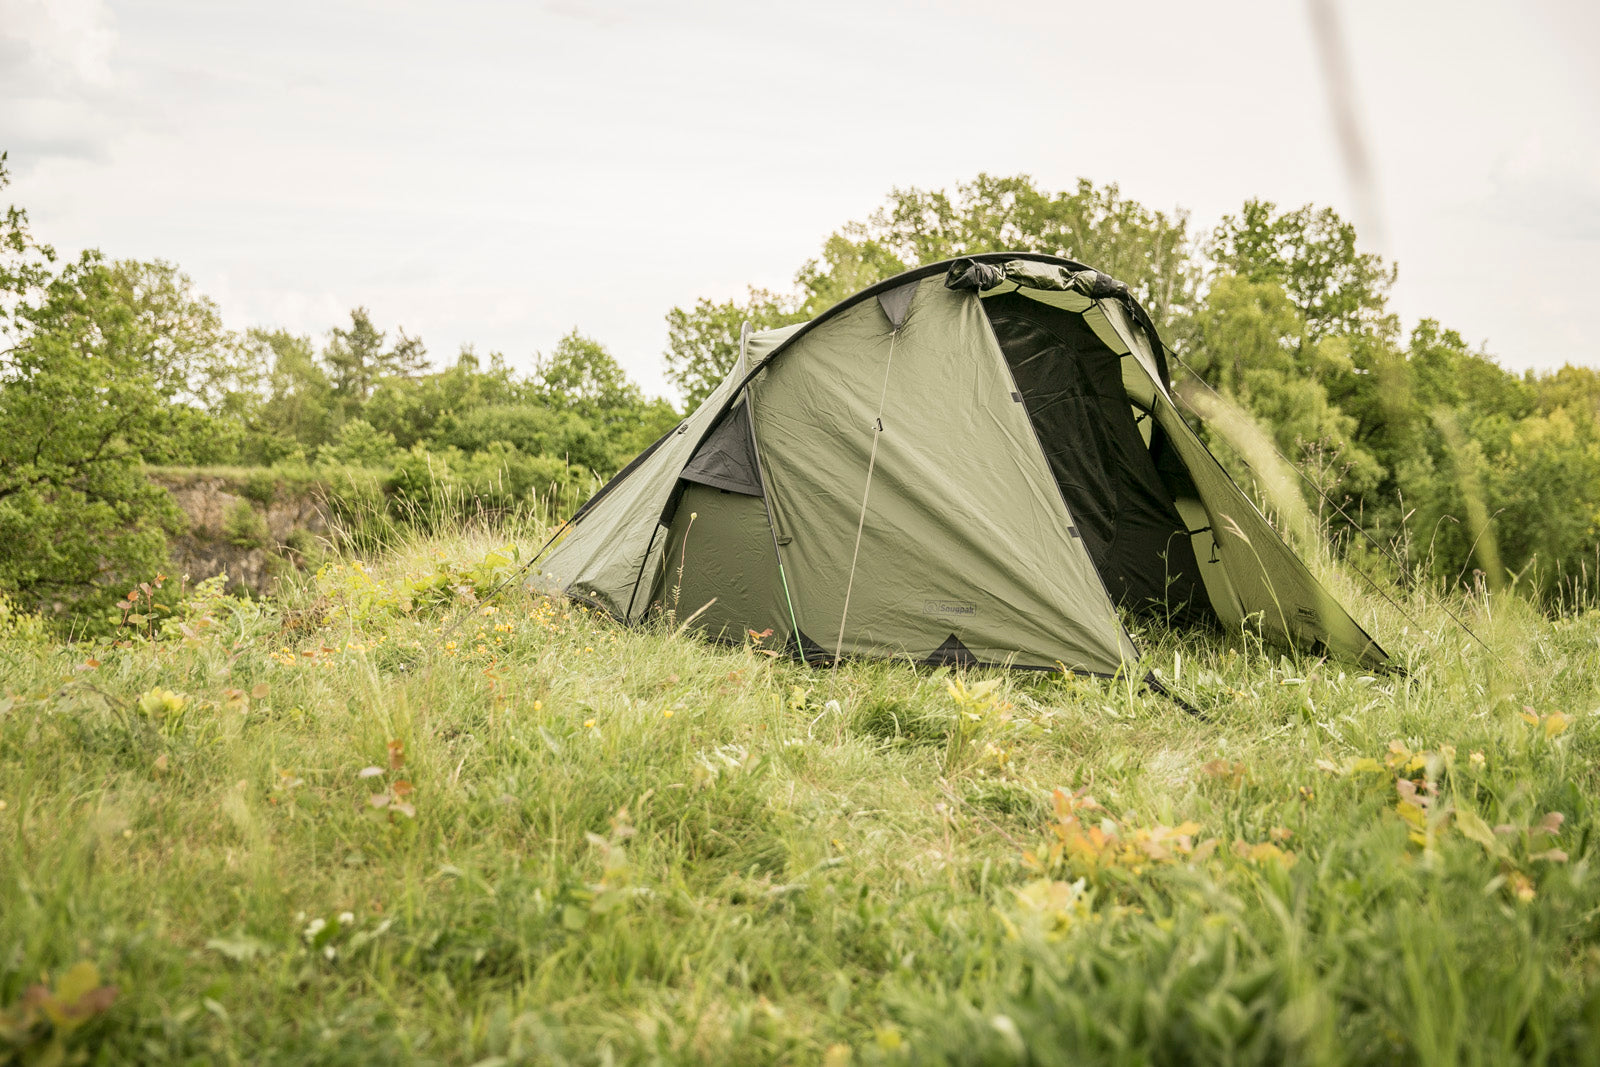 Snugpak Scorpion 3 Tent 三人輕量軍事風帳篷